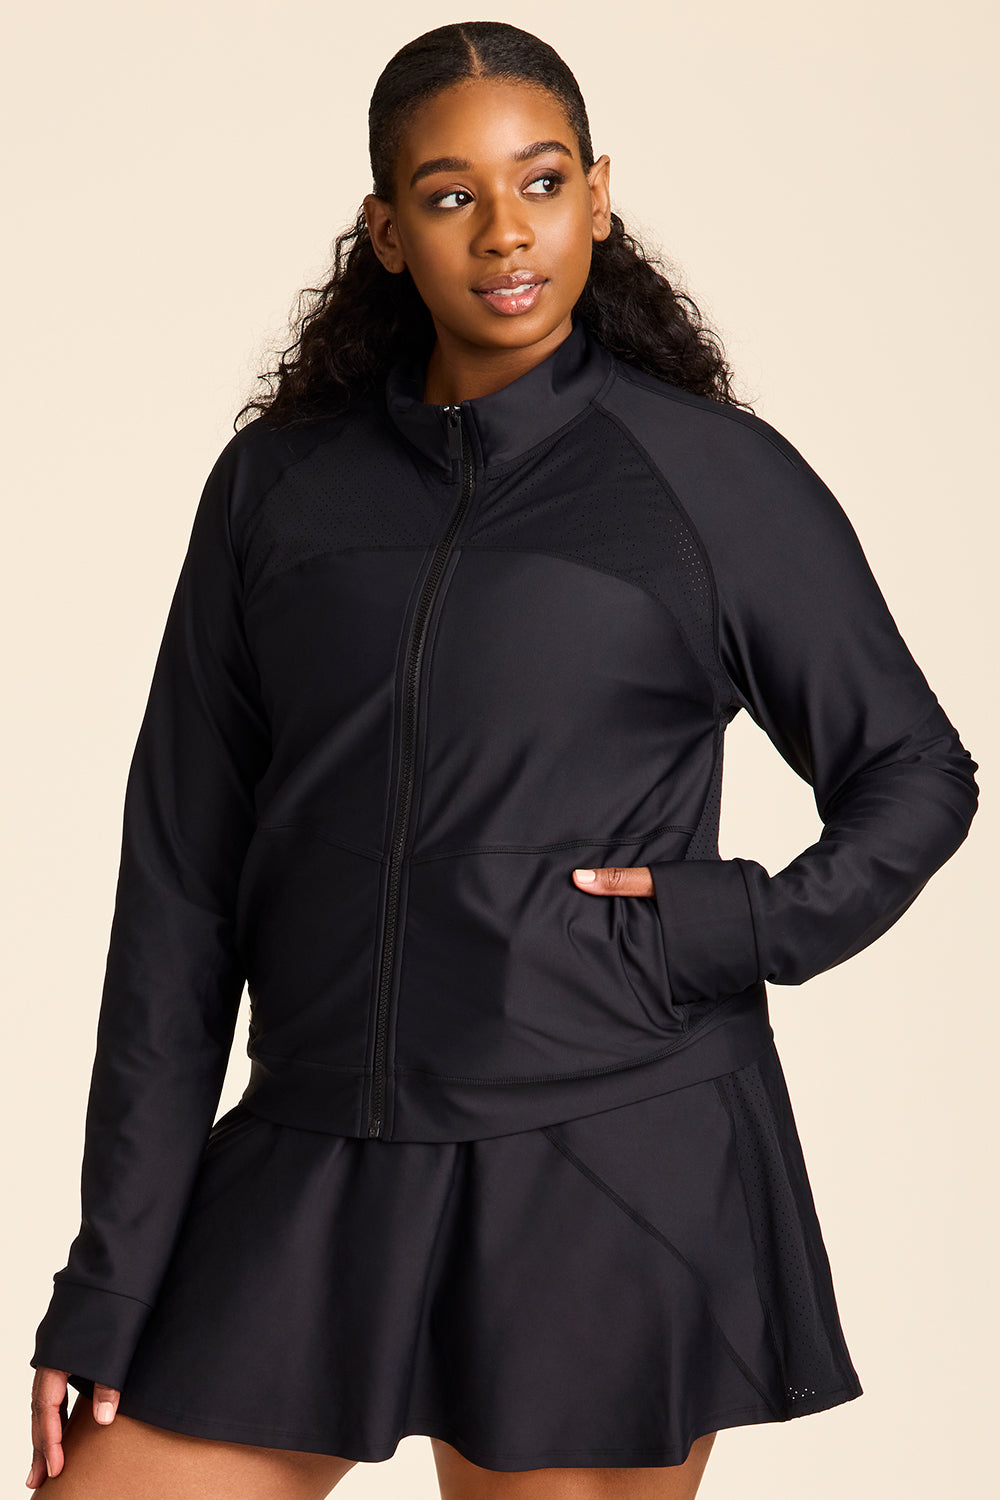 Ace Jacket - Black Tennis Jacket, Athletic Jacket Womens